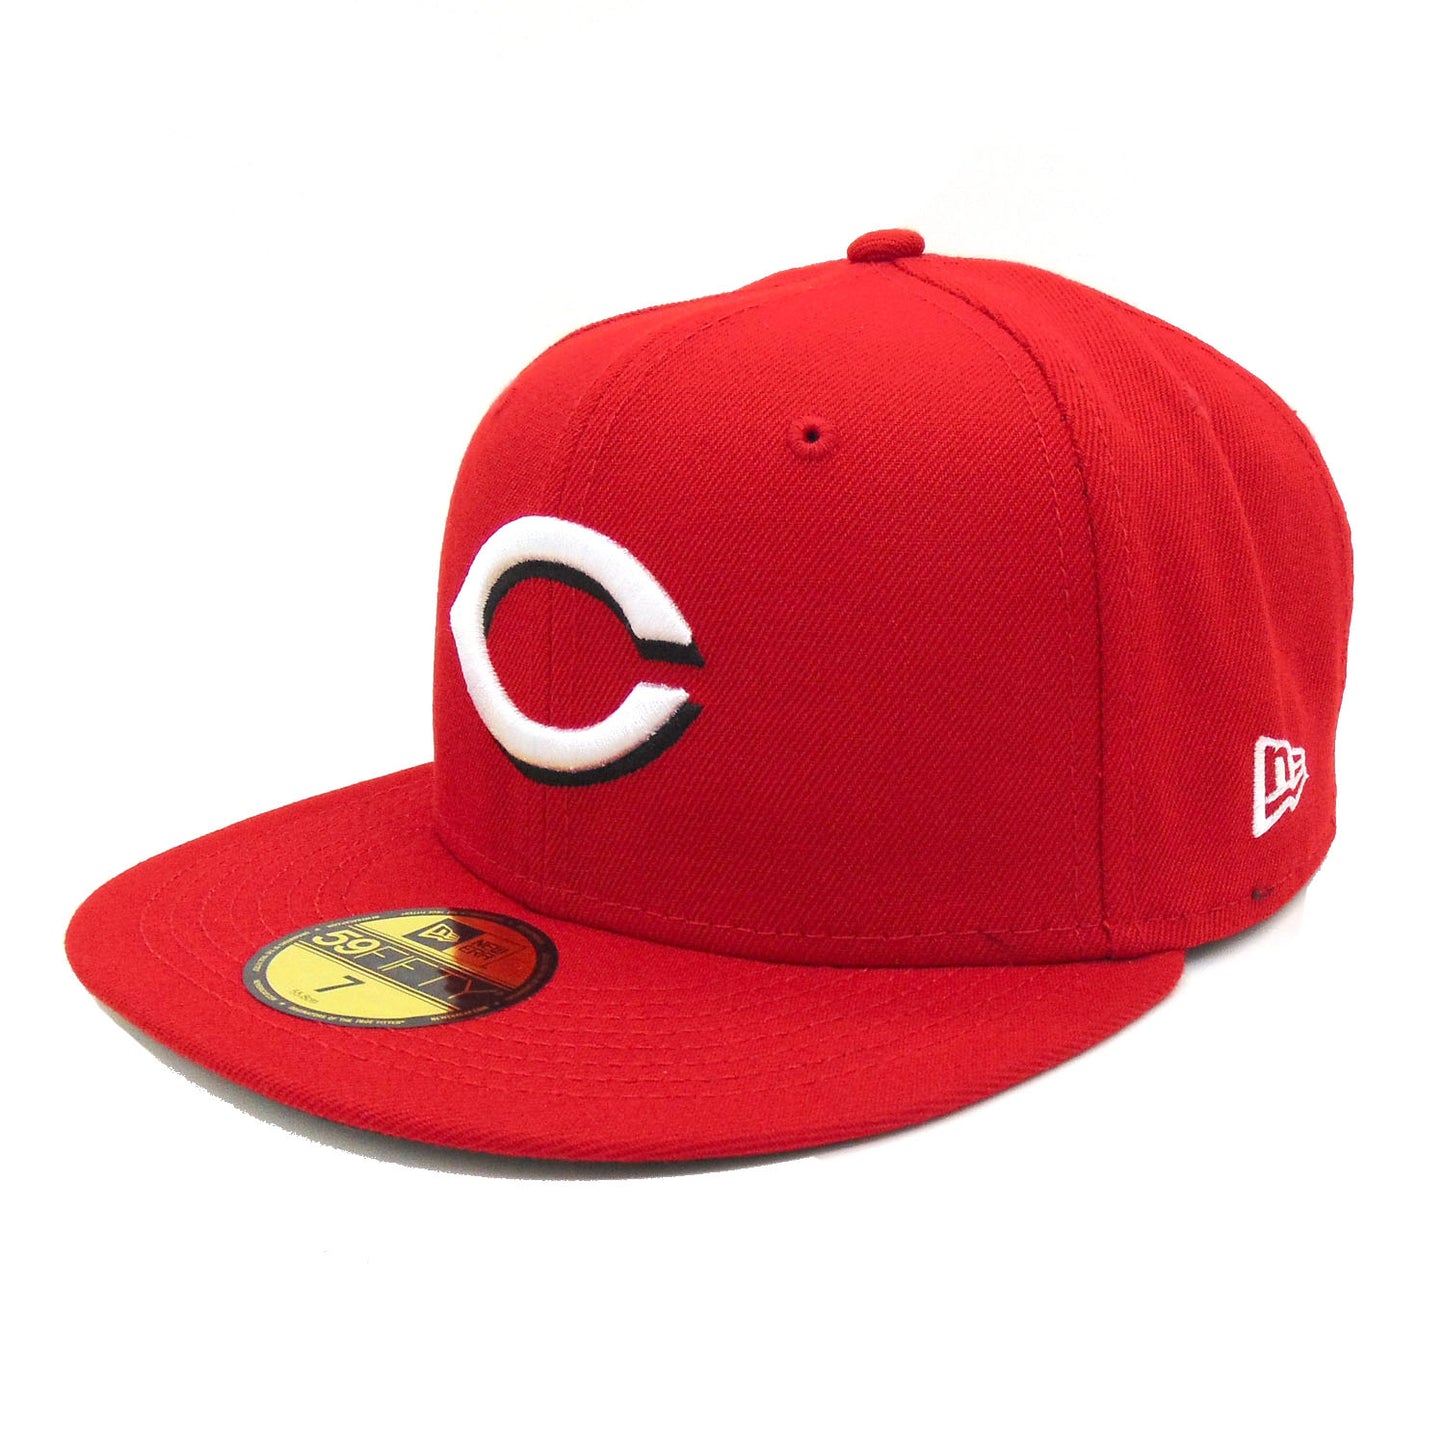 Cincinnati Reds Authentic New Era 59FIFTY Cap Red